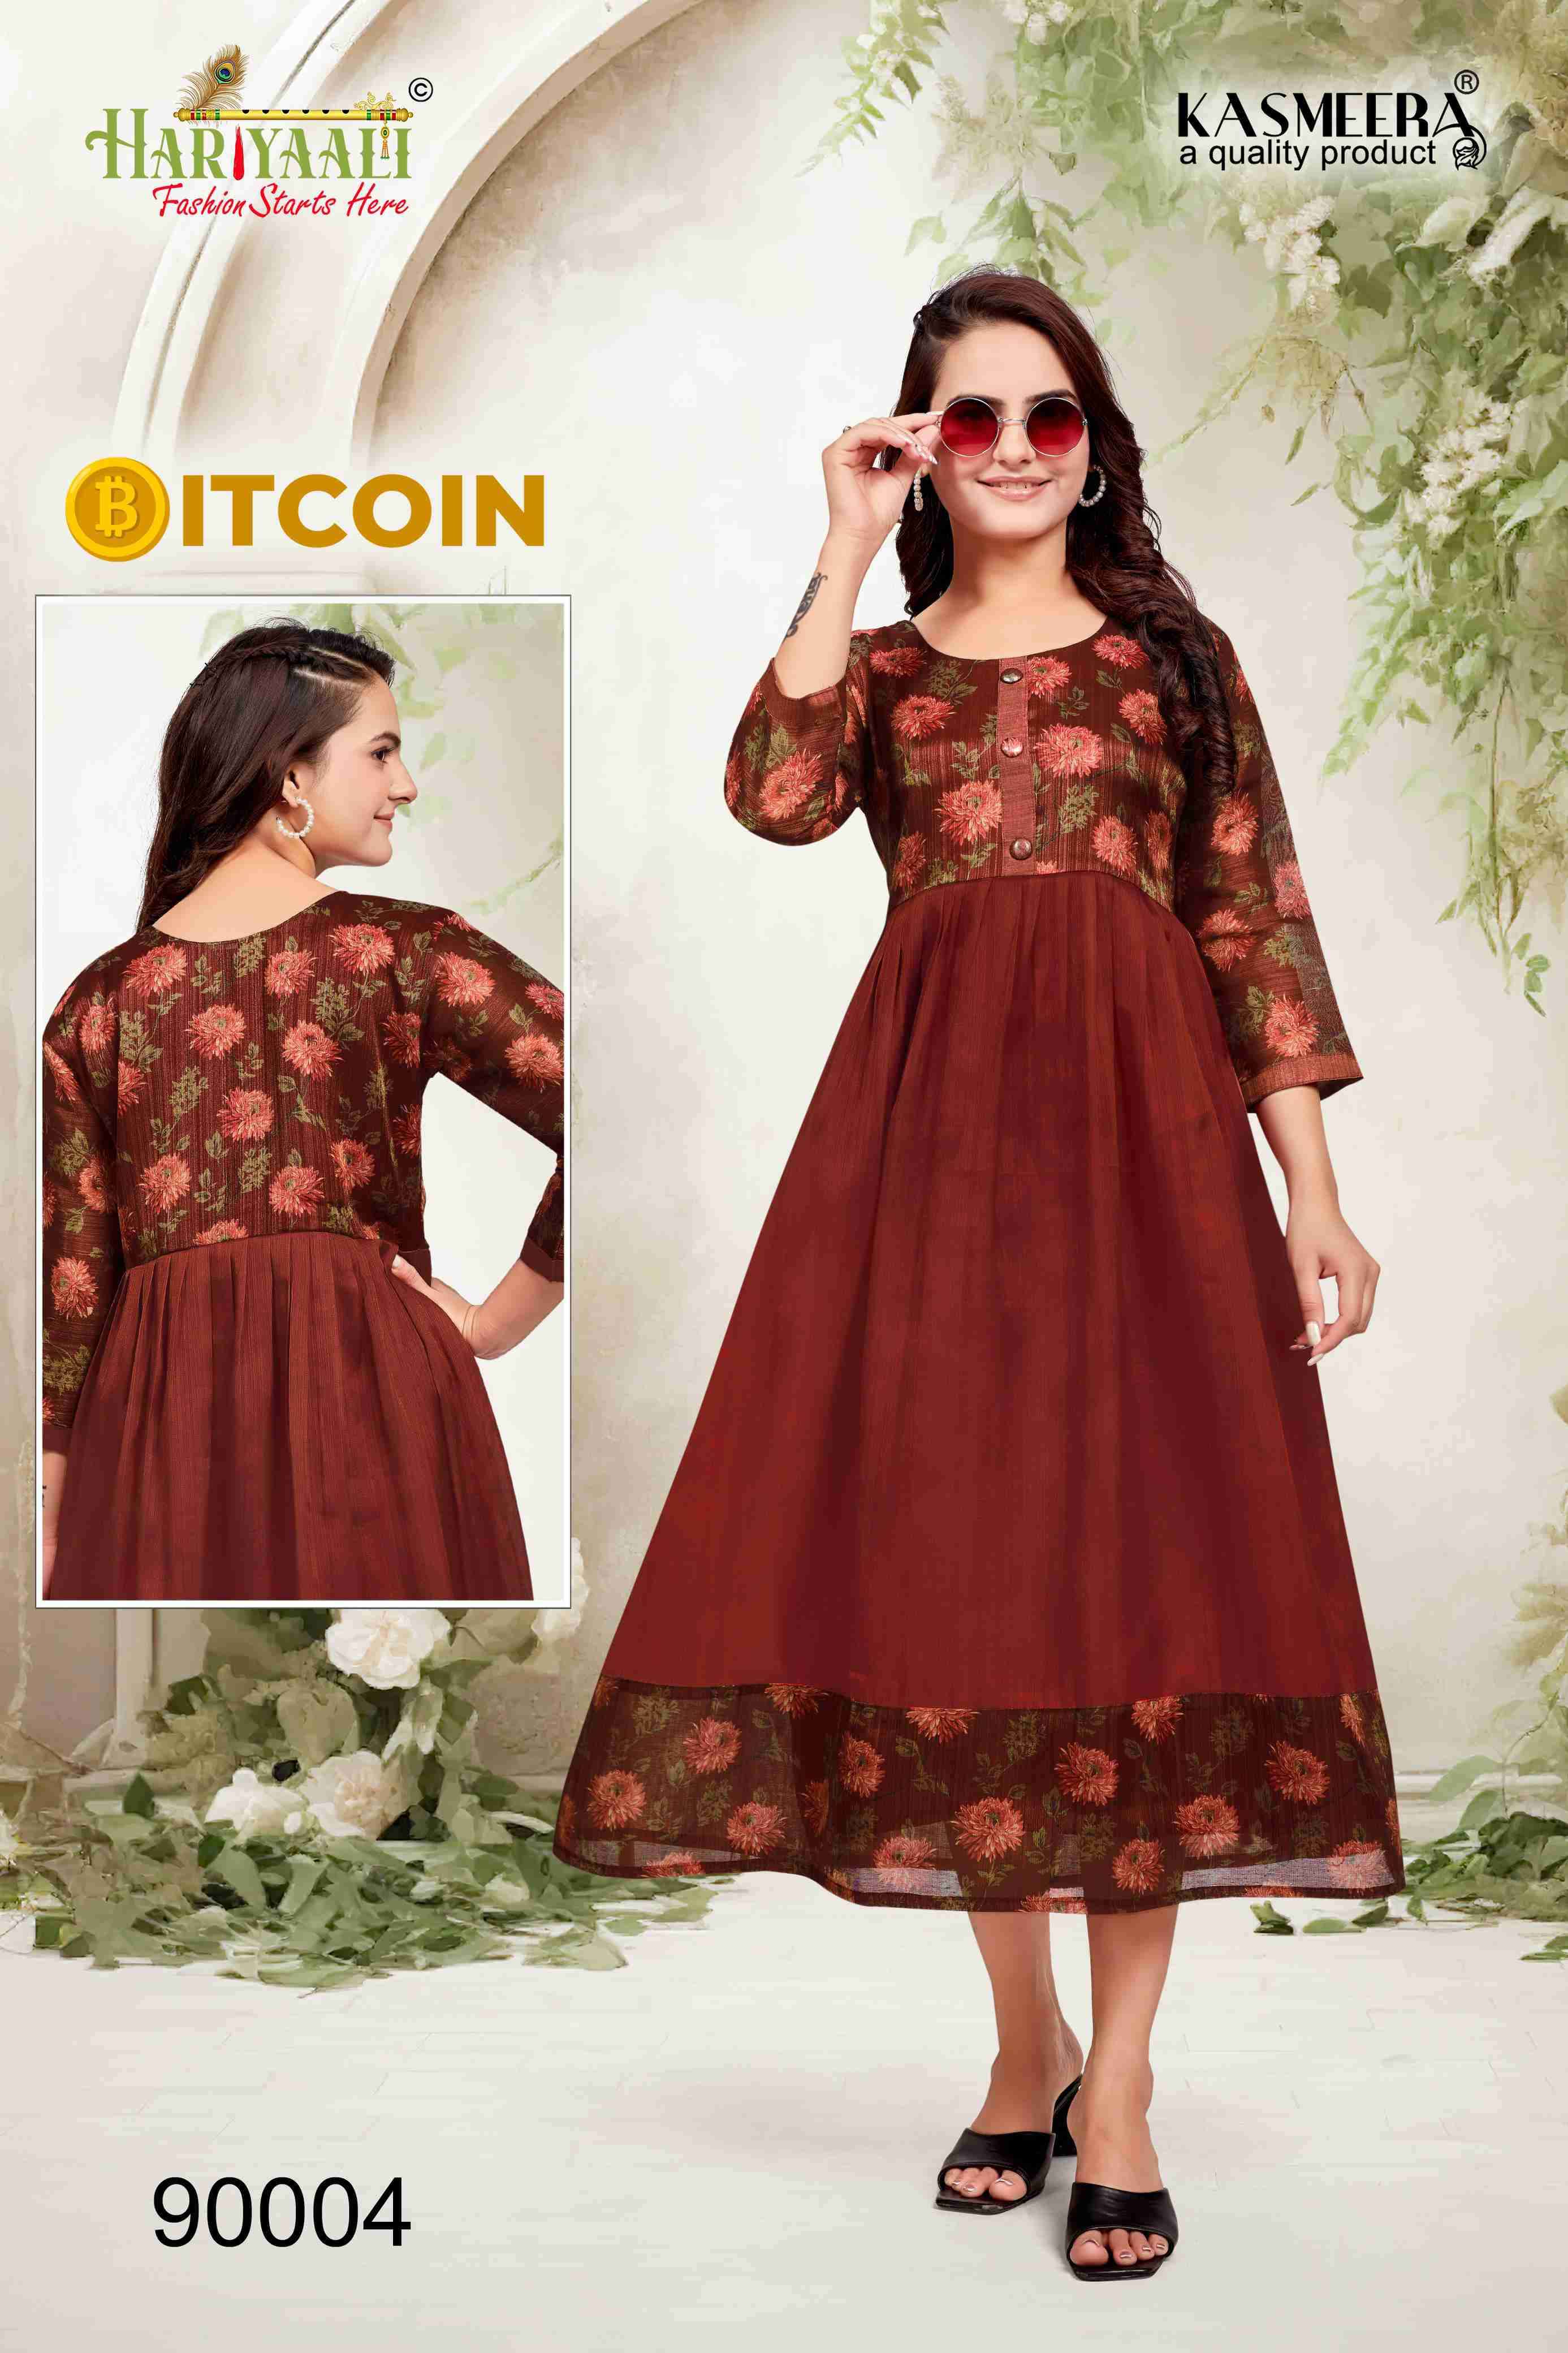 Hariyaali Bitcoin Ladies Wear Fancy Silk Kurti Online Catalog Suppliers